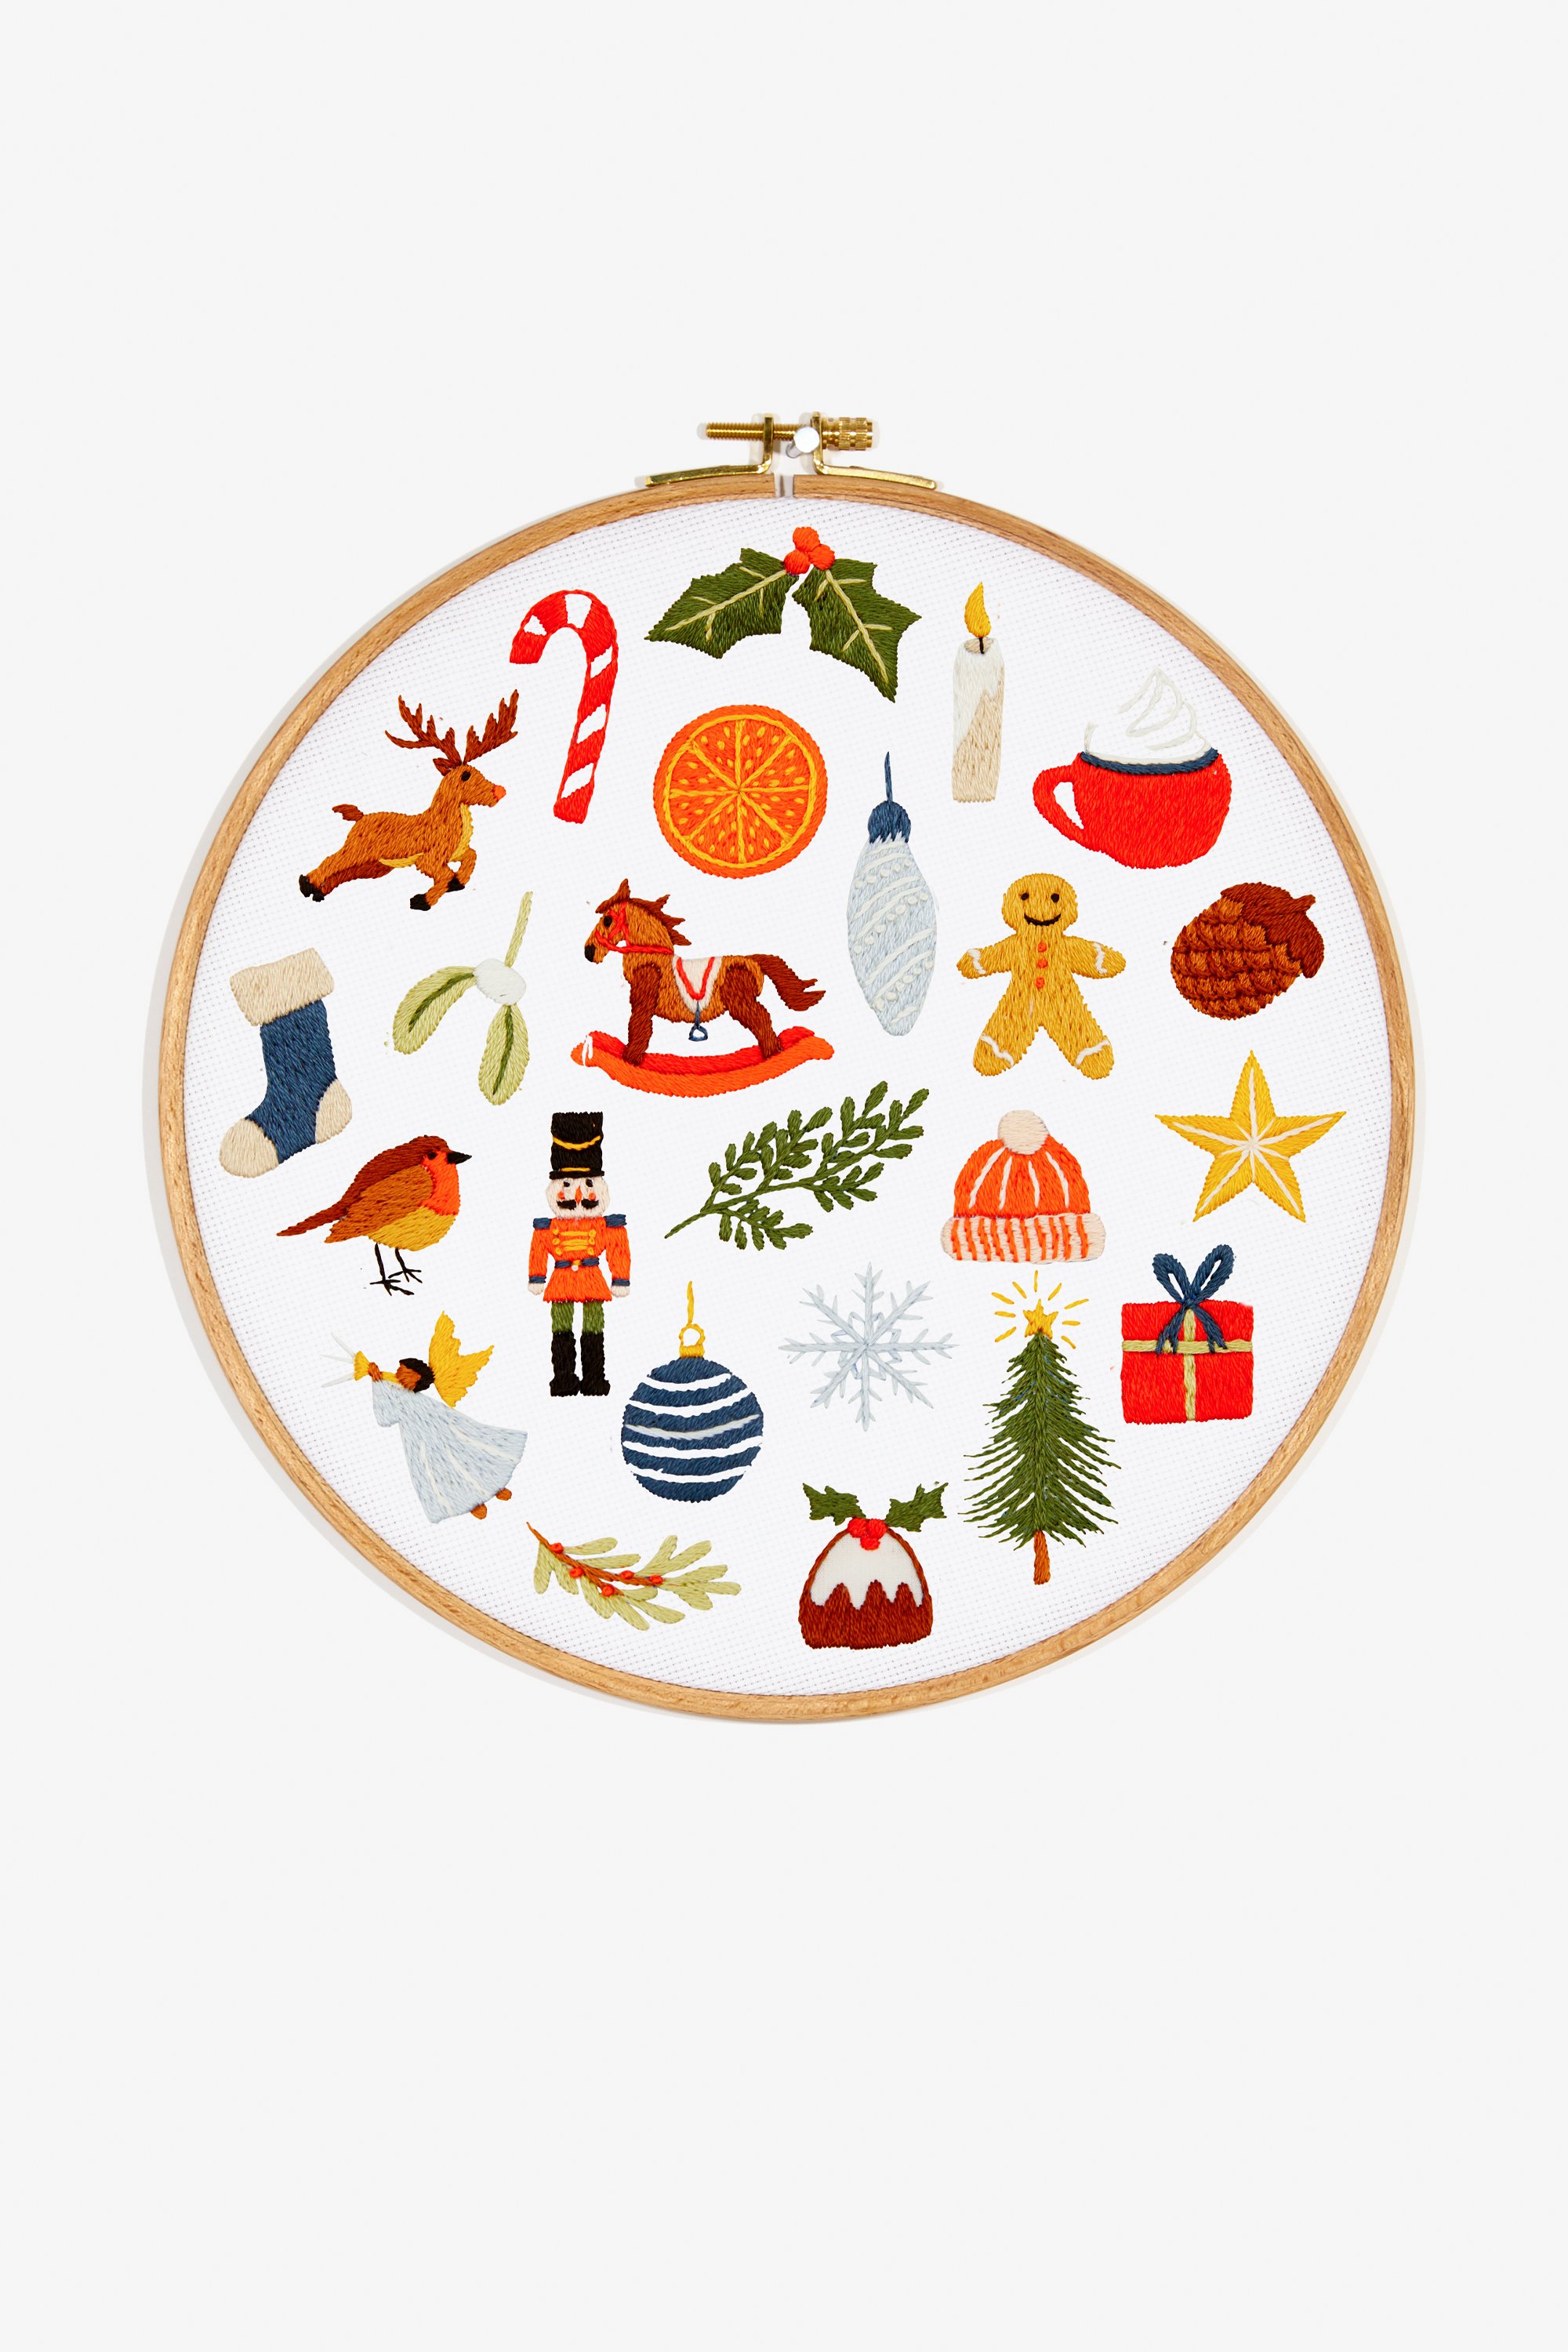 Embroidery Advent Calendar Pattern エンブロイダリーパターン Dmc